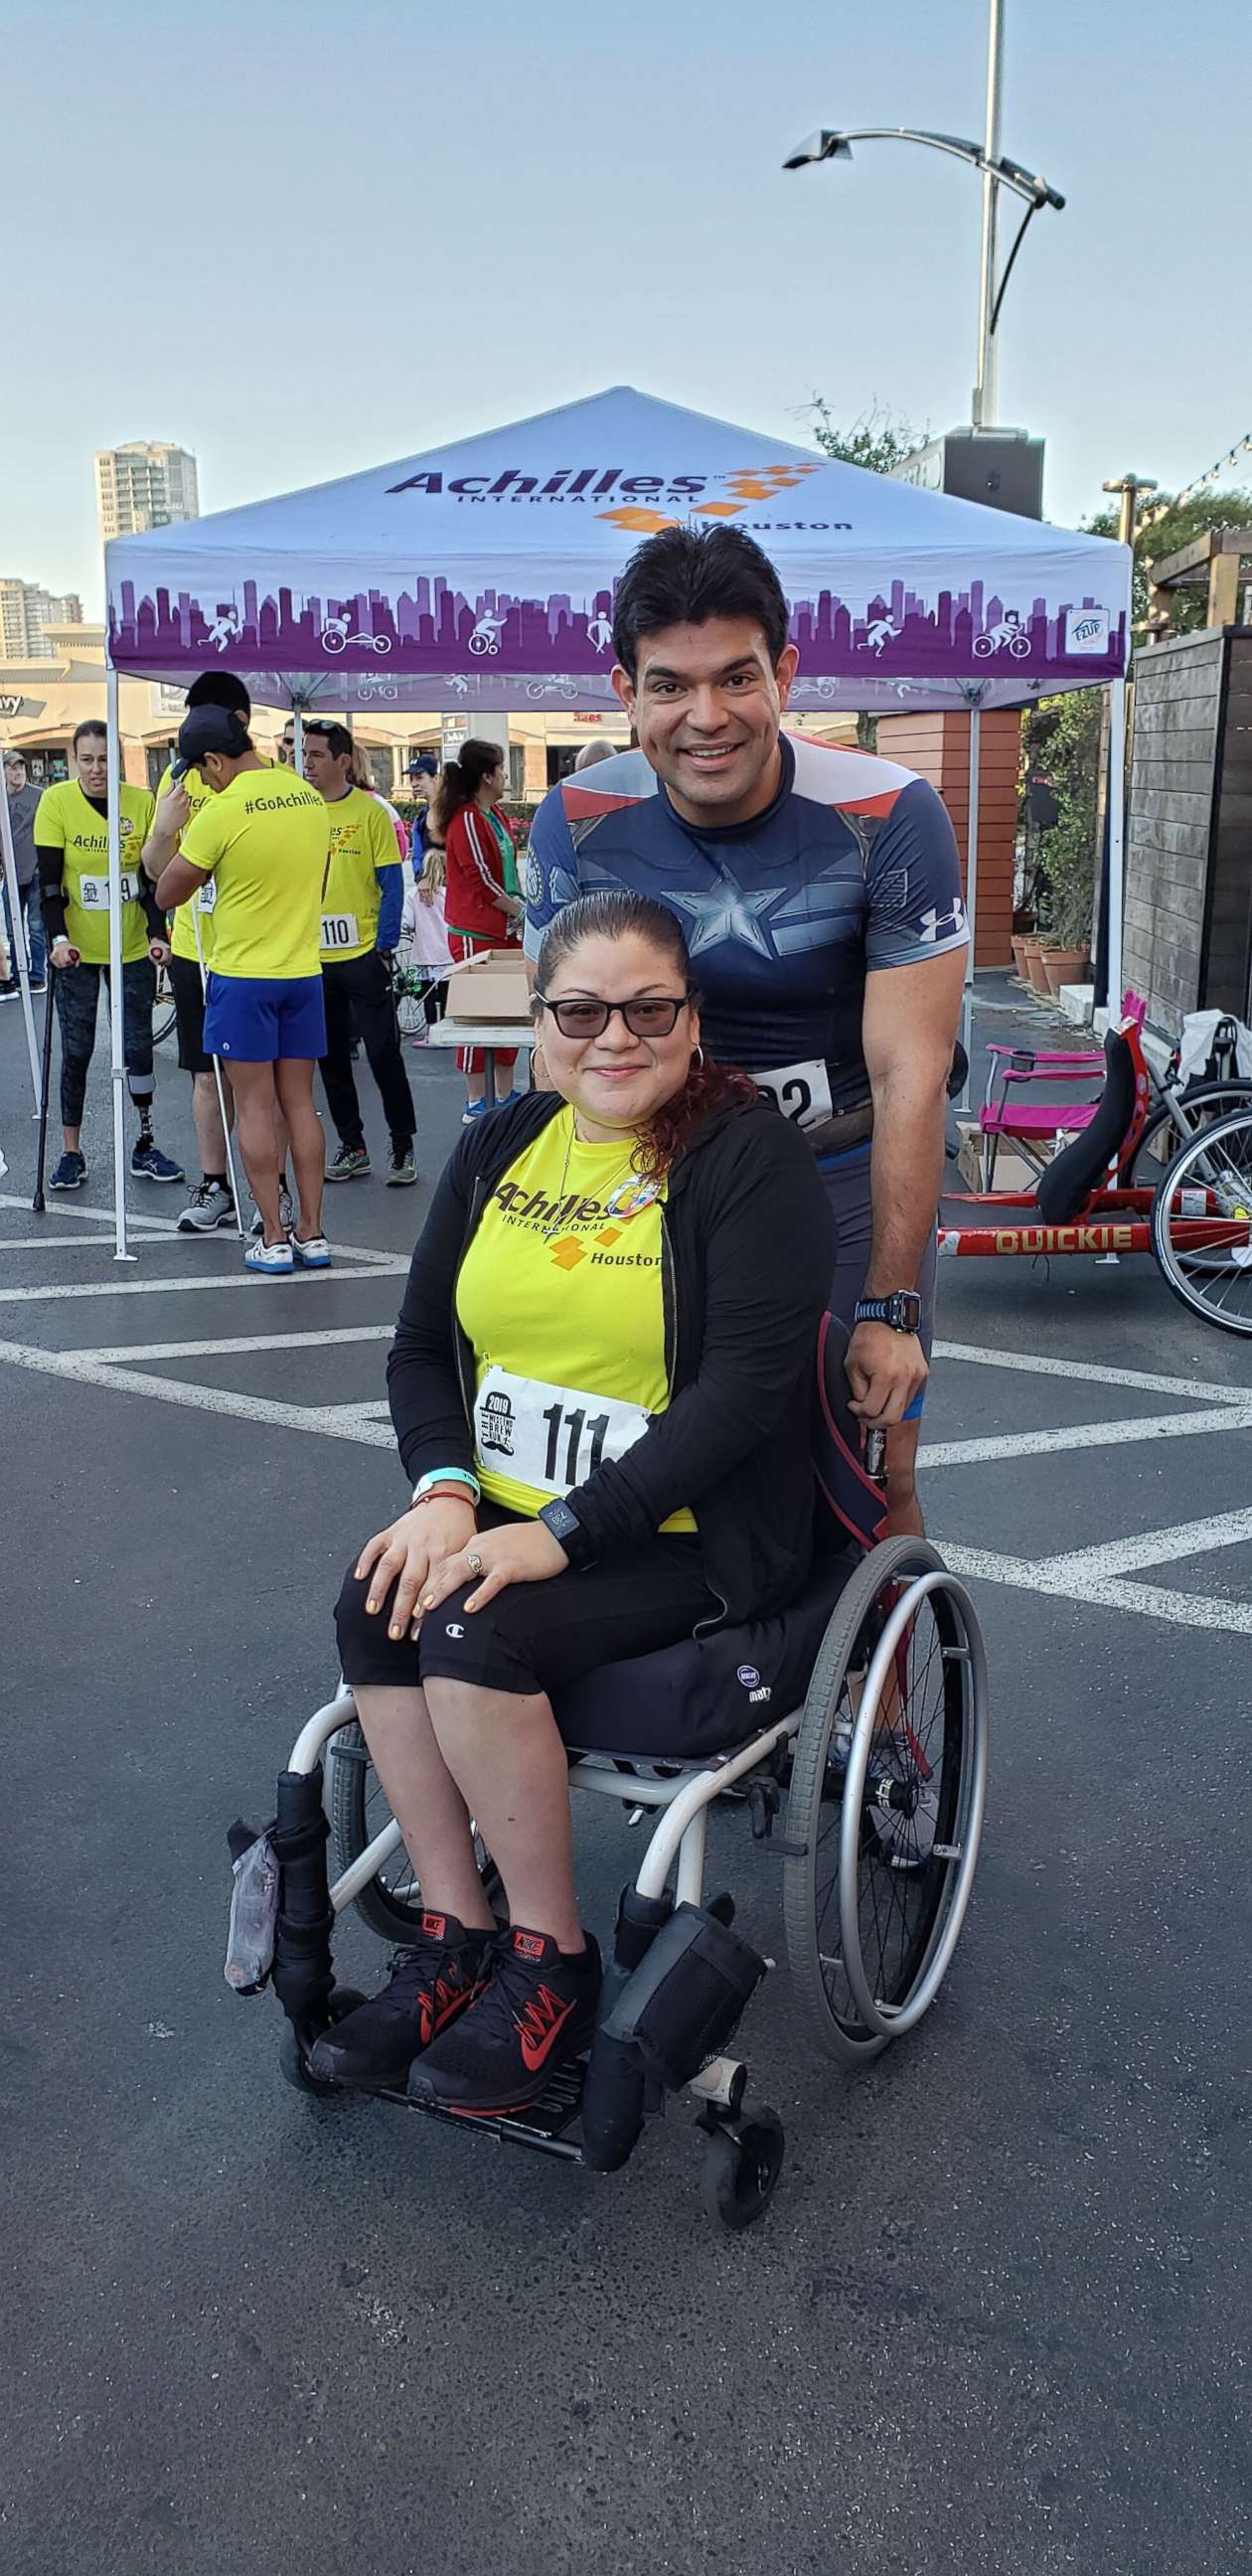 PHOTO: Juan Sorto and Gloria Suarez, of Houston, pose together at an Achilles International Houston event.